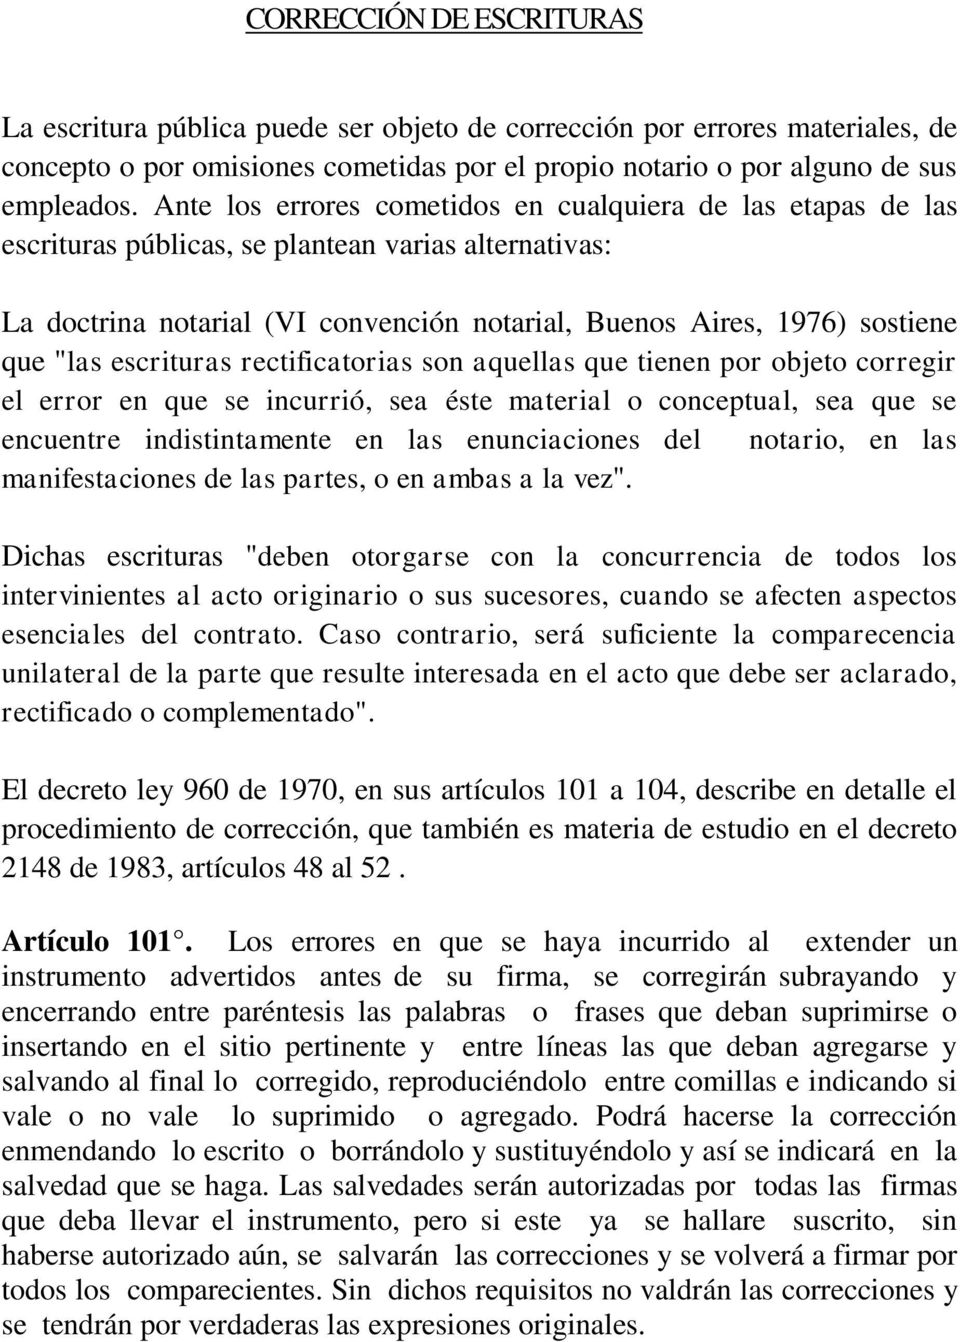 CORRECCIÓN DE ESCRITURAS - PDF Descargar libre